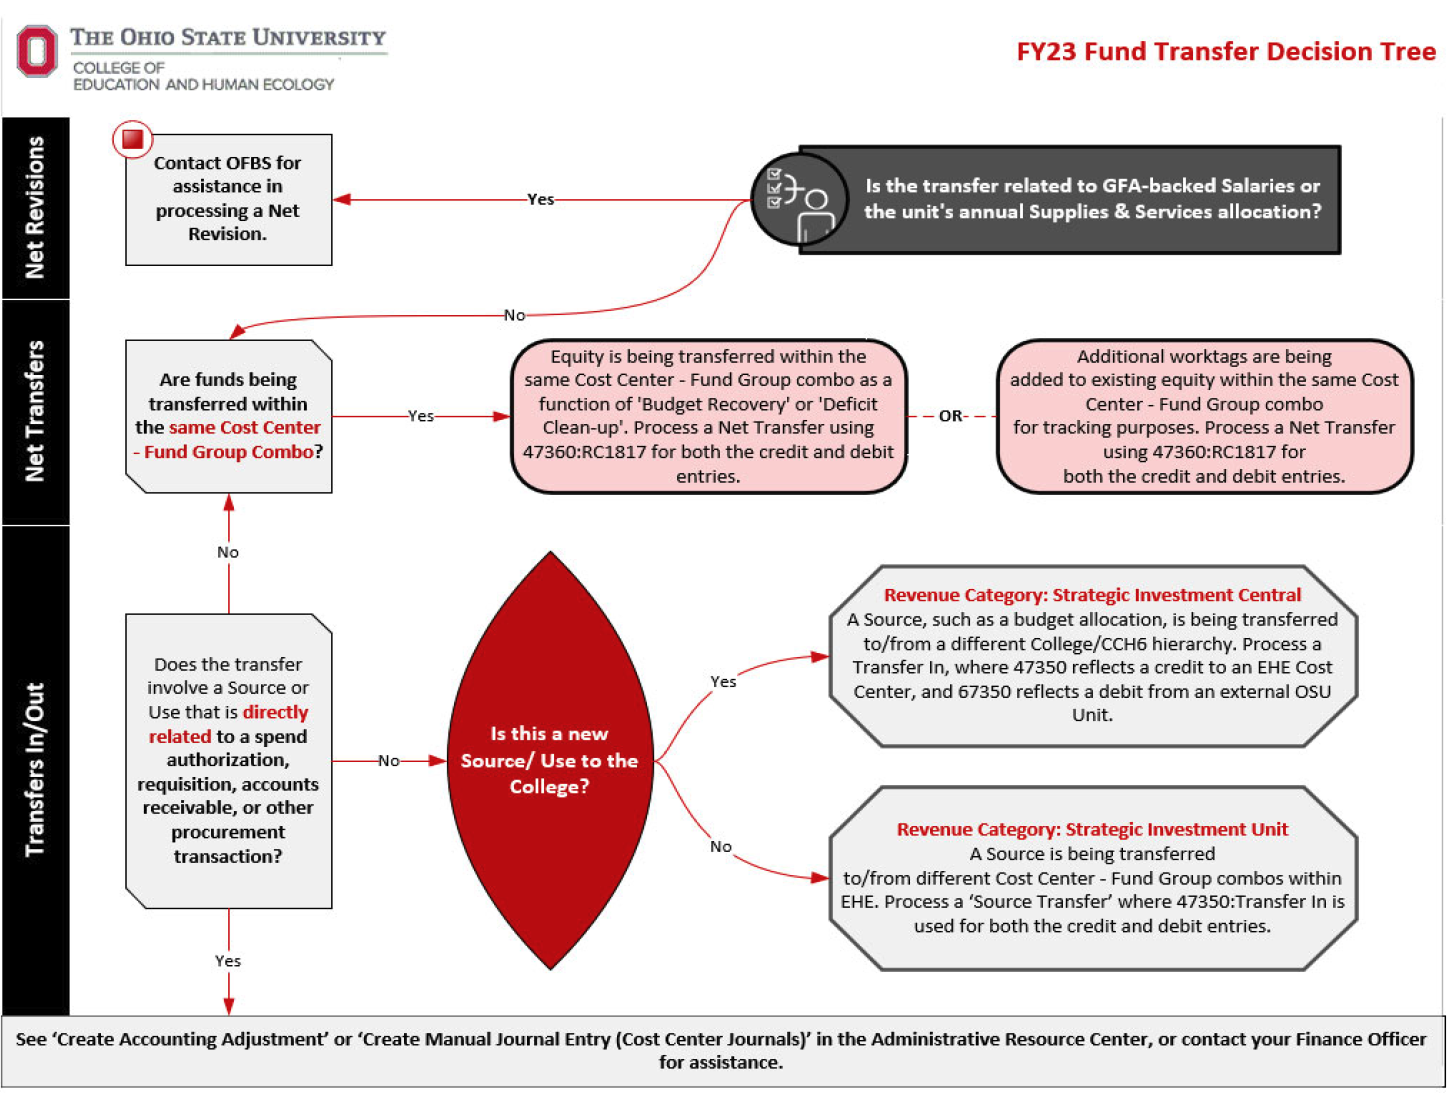 FY23 Fund Transfer Decision Tree